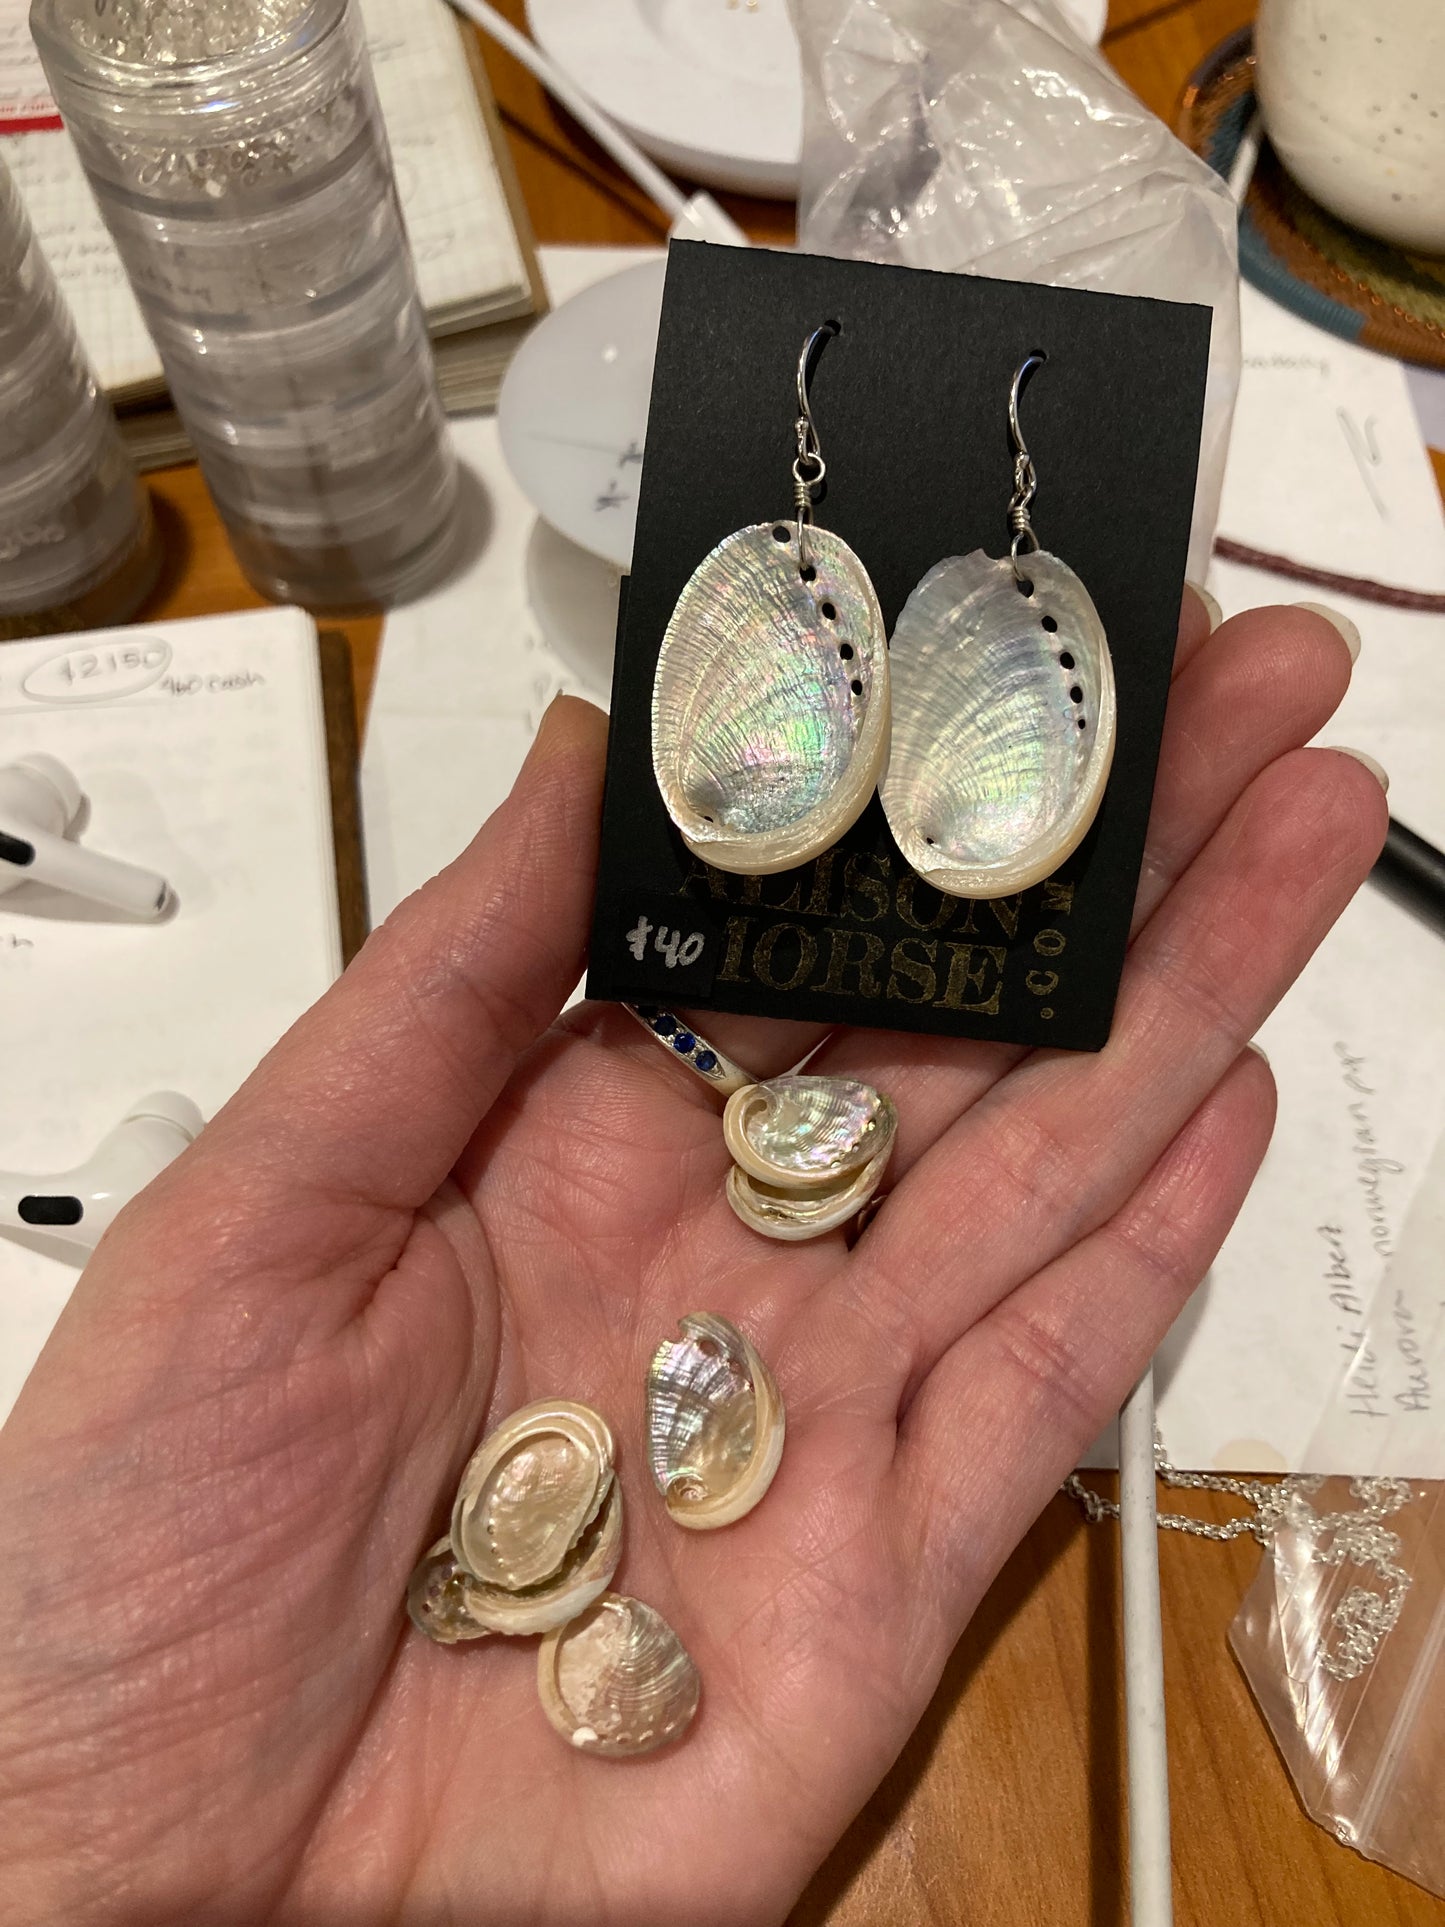 Abalone earrings